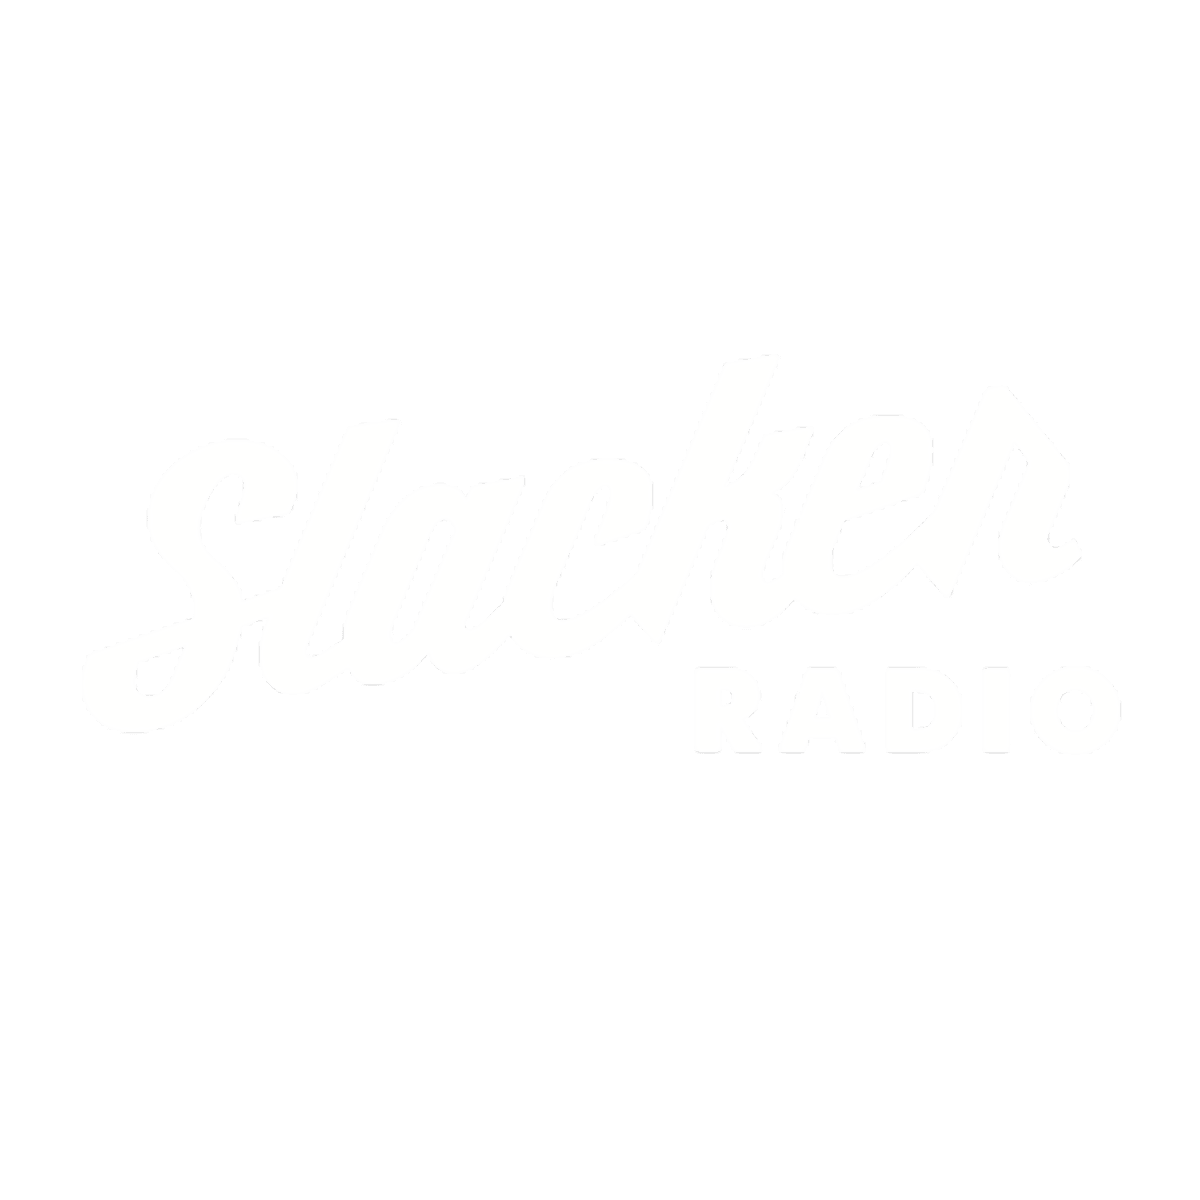 go to slacker radio